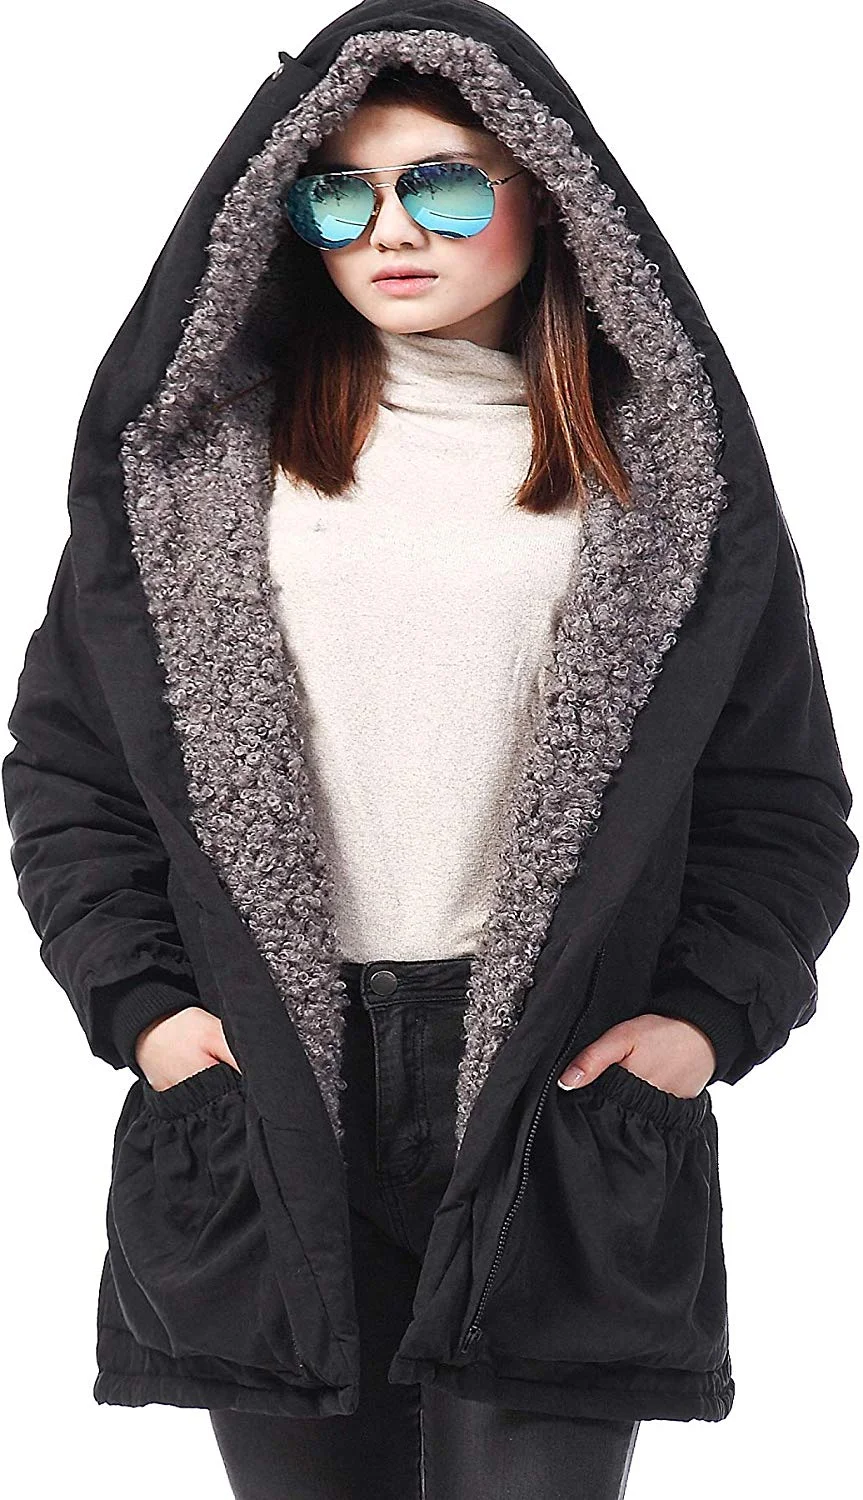 Winter Thicken Faux Fur Hooded Plus Size Parka Jacket Coat Size S-3XL for women